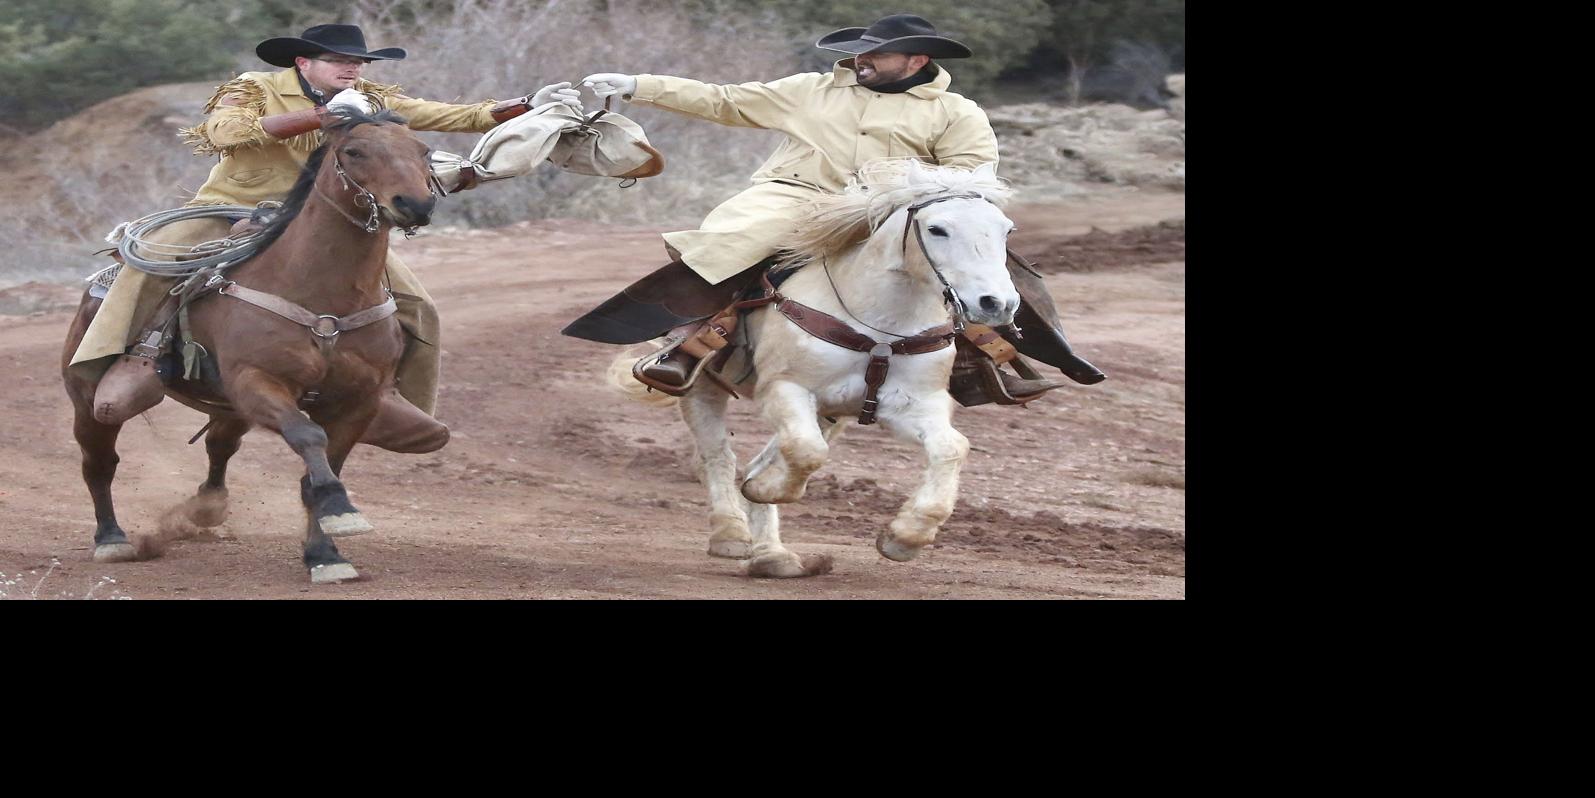 Hashknife Pony Express rides into Payson Wednesday Gila County